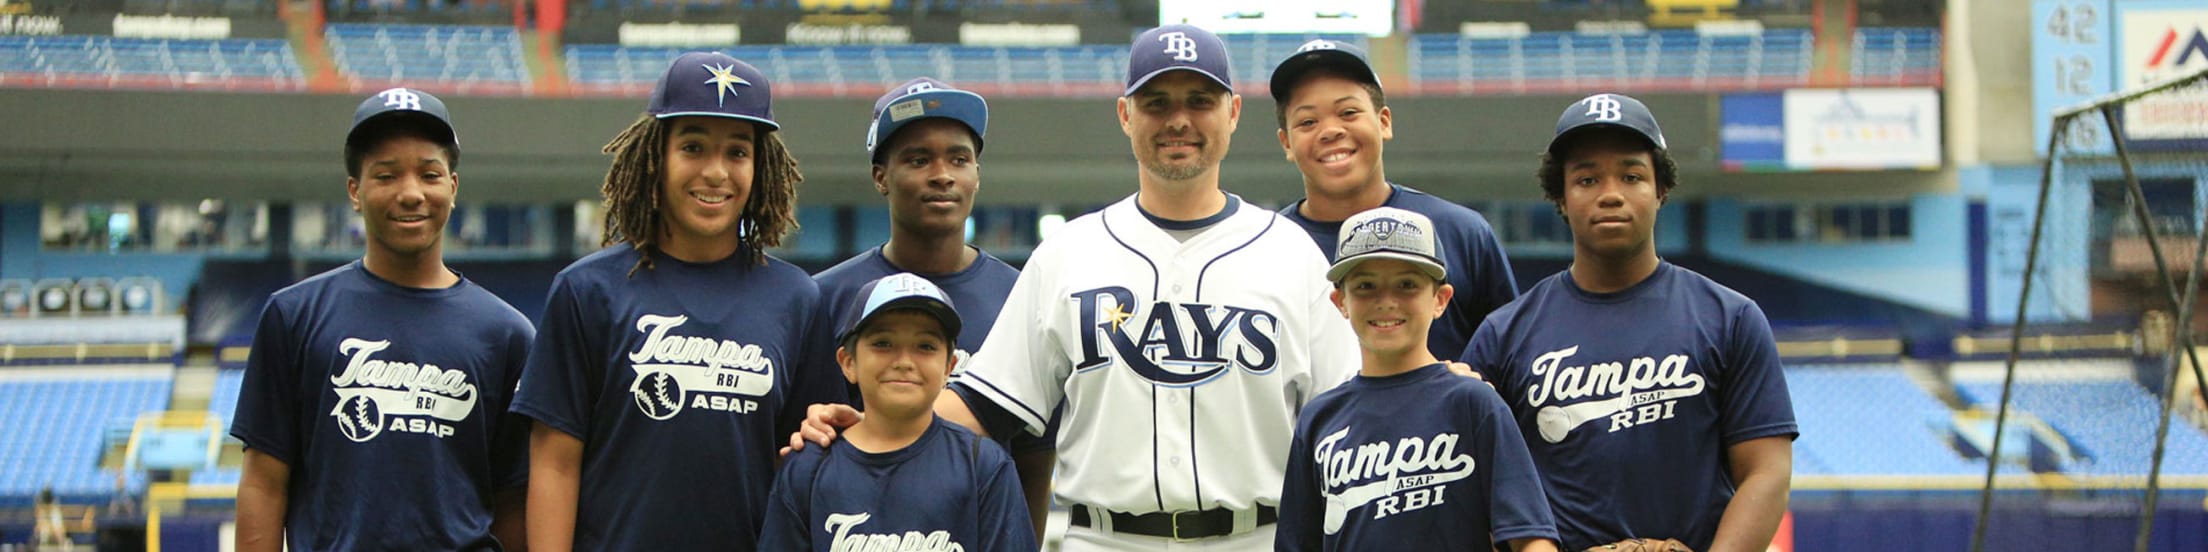 Tee Ball Initiative, Rays Play Ball, Tampa Bay Rays